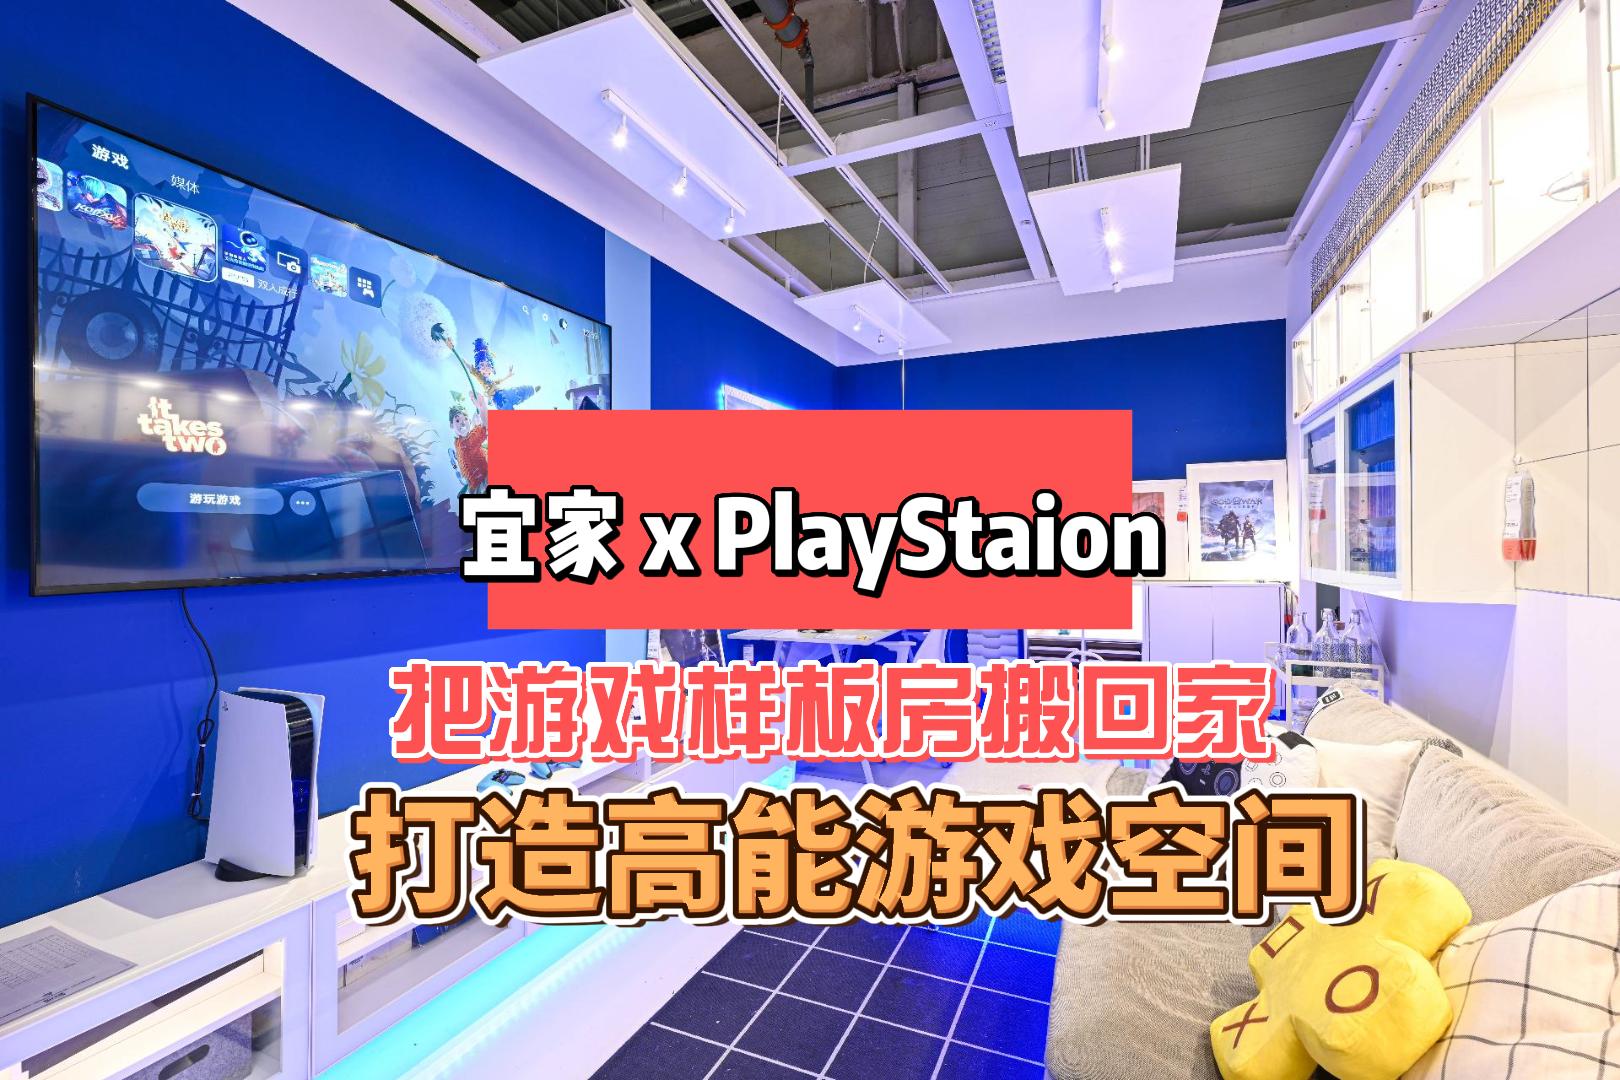 Playstation x 上海宜家，把游戏样板房搬回家